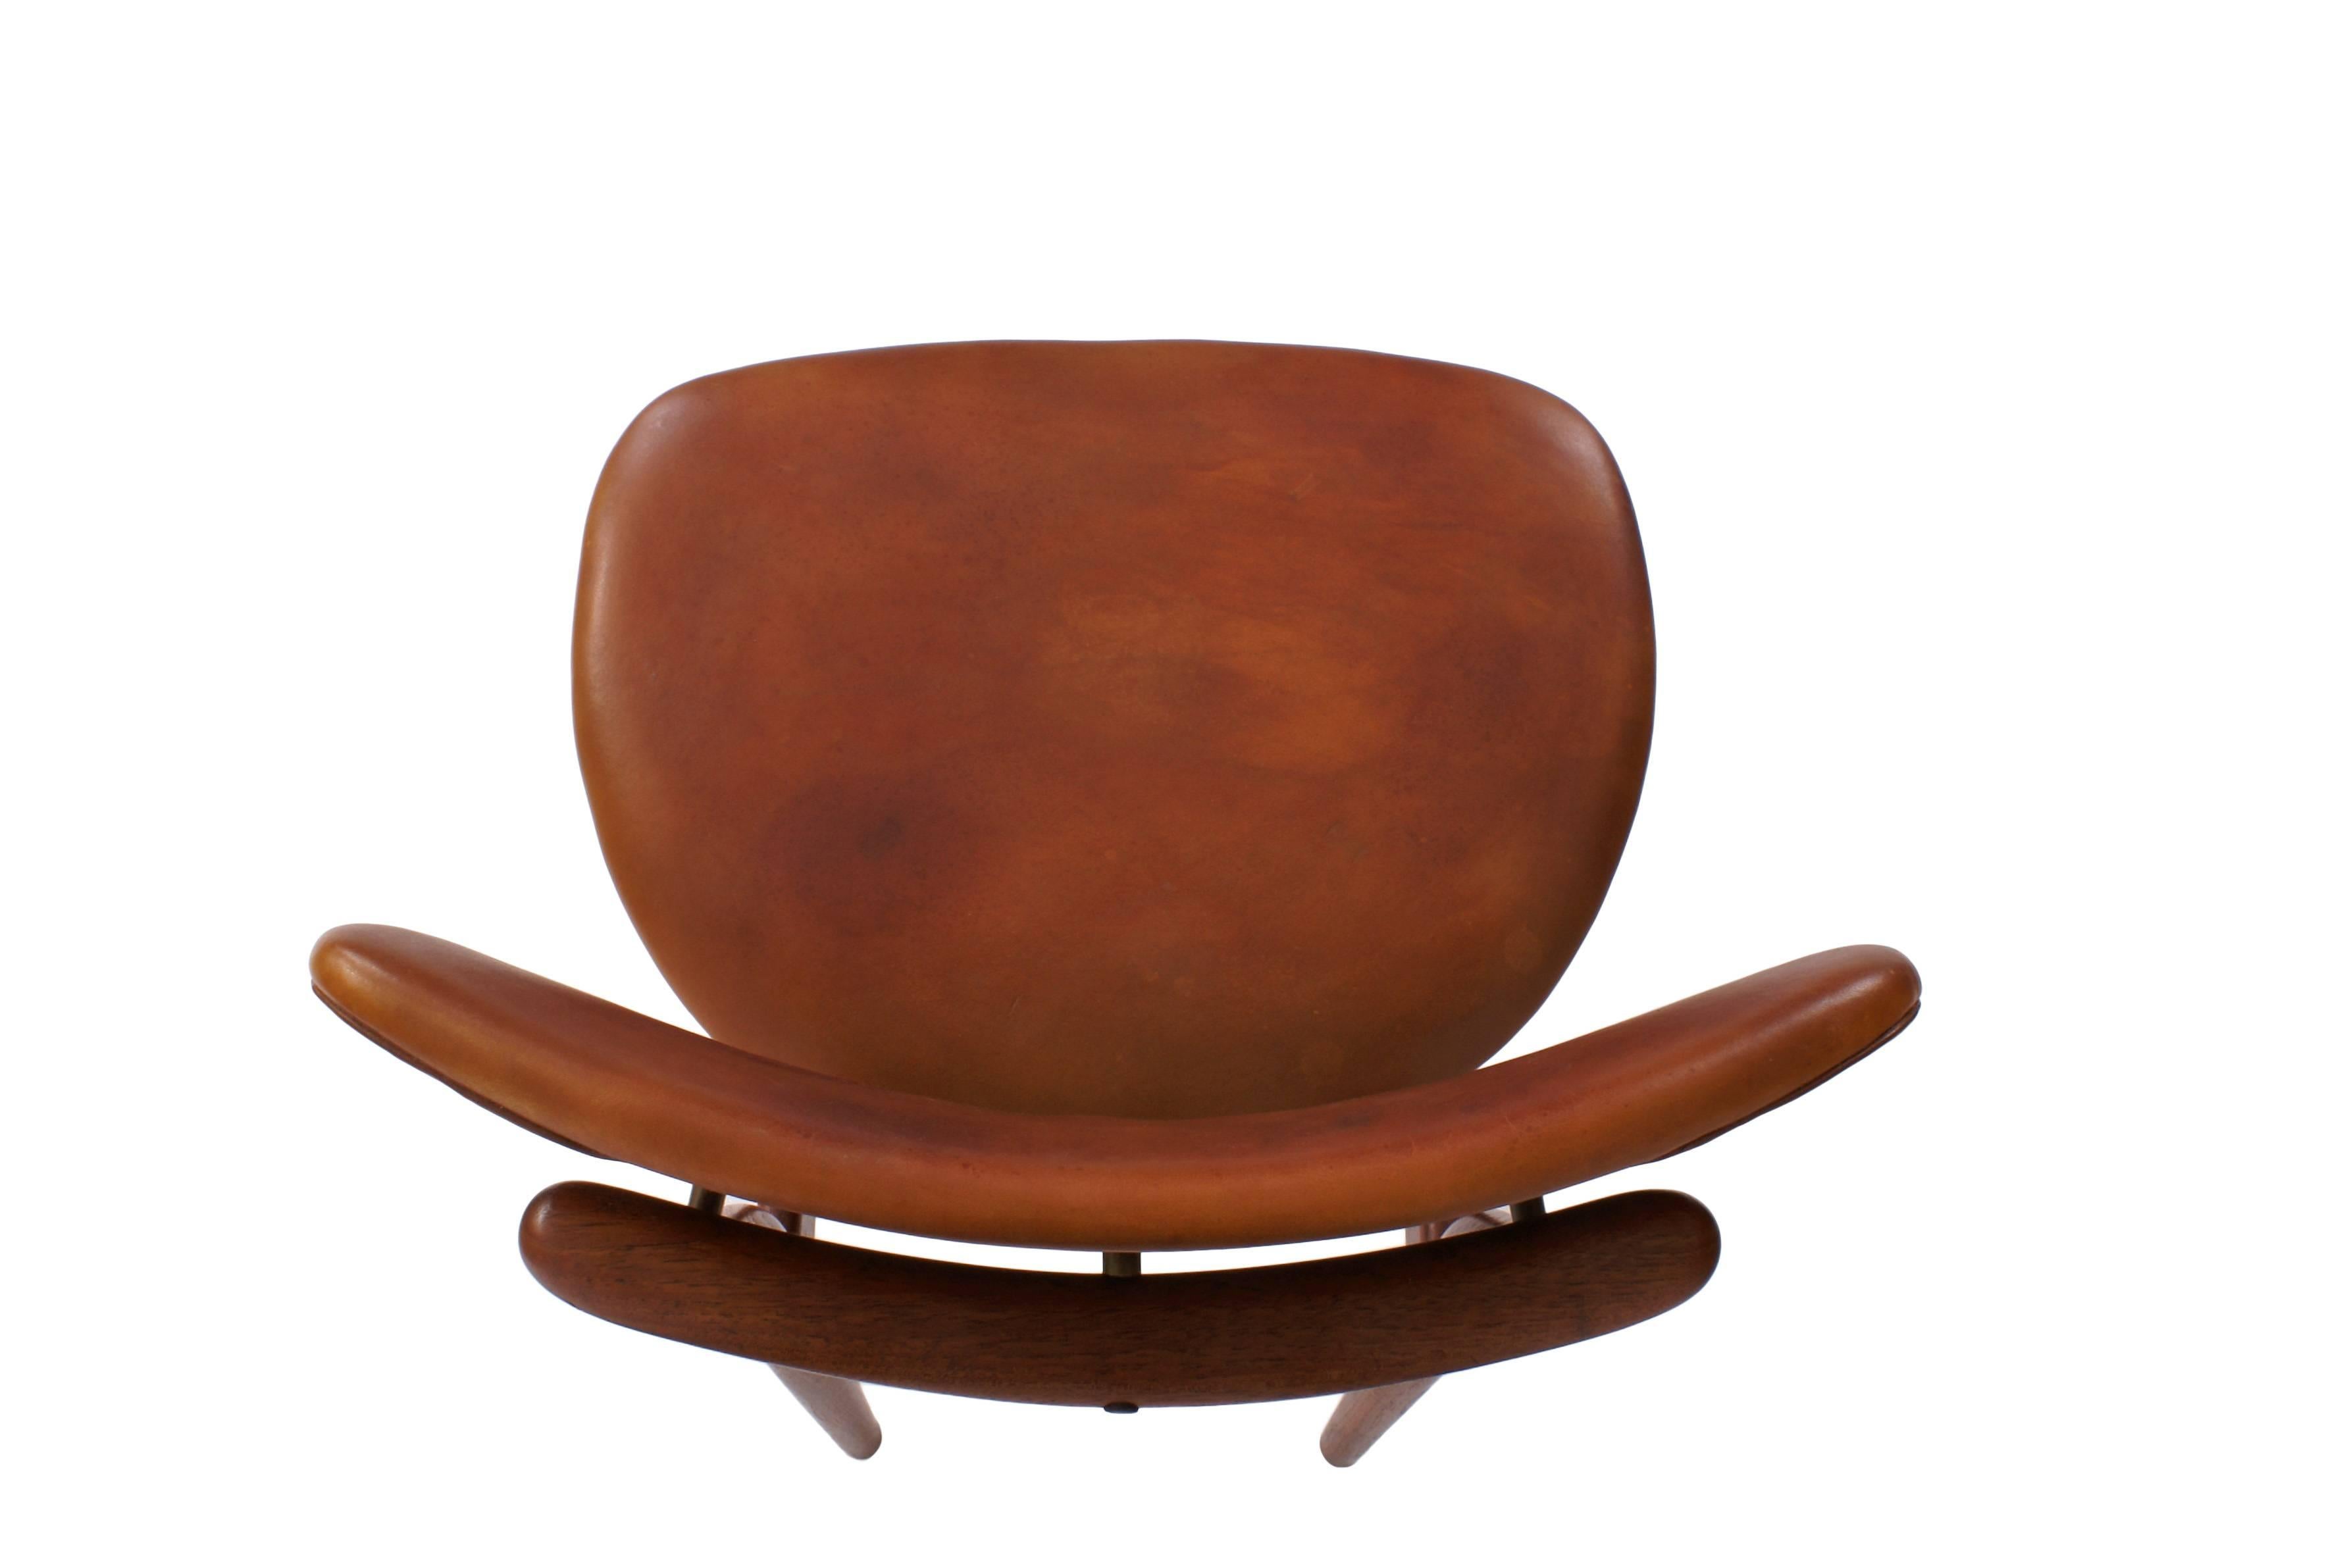 Finn Juhl NV55 Chair for Niels Vodder in Teak and Natural Leather, 1955 1